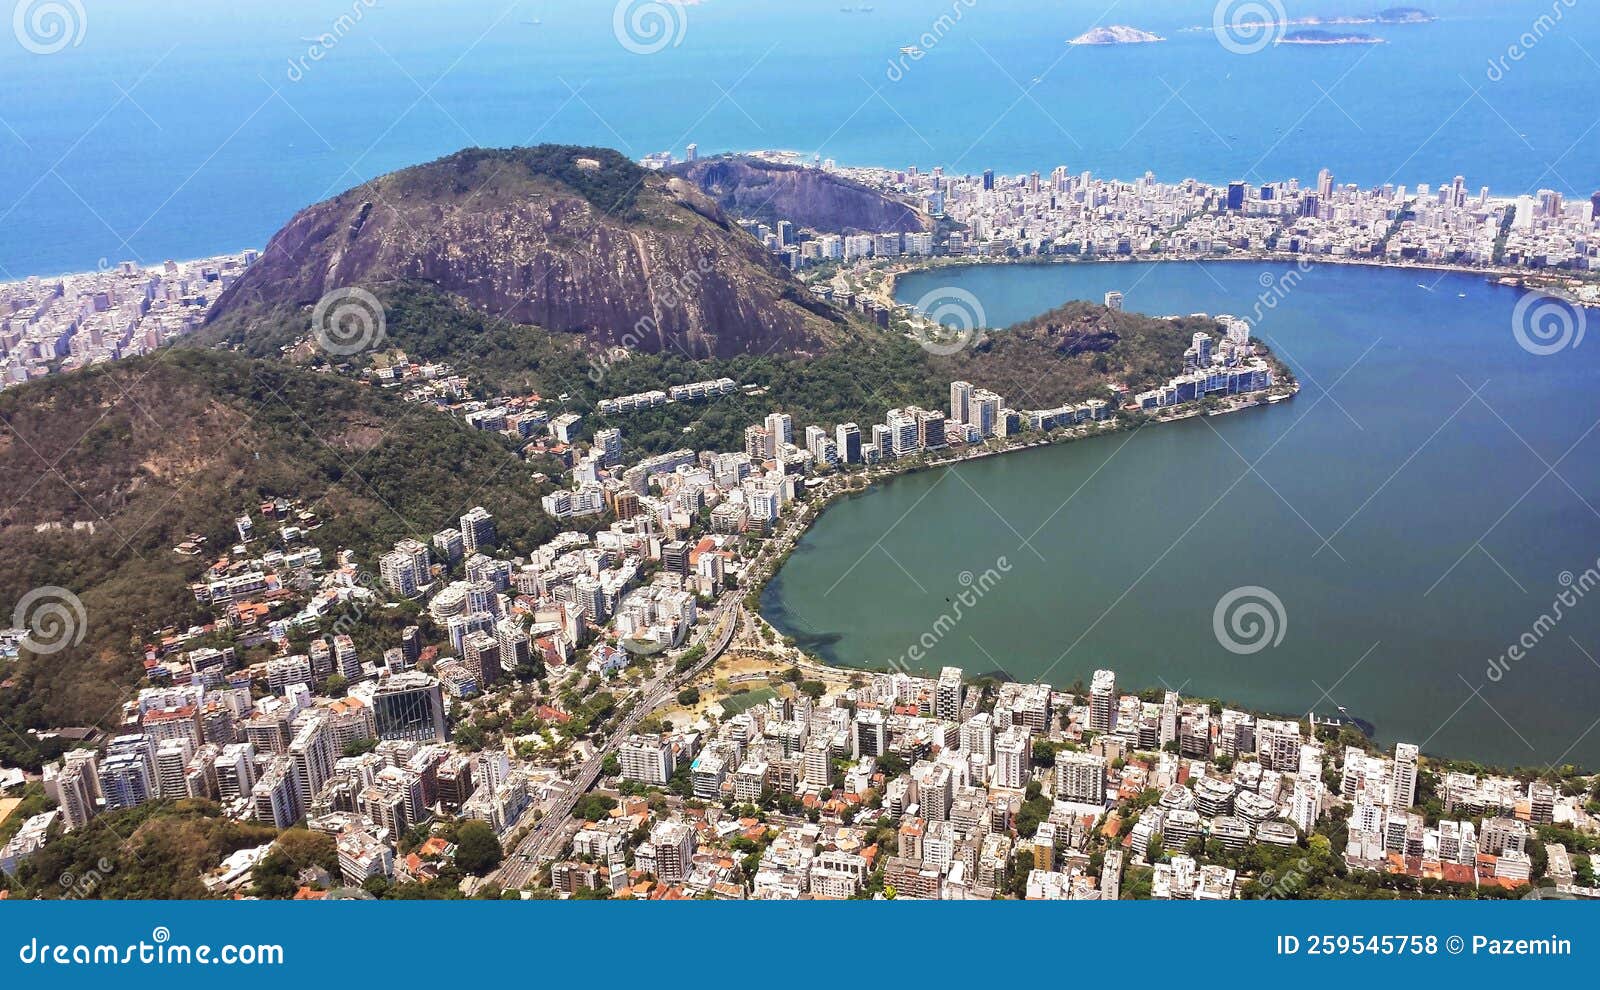 areal view of a famous copa cabana beach in brazil, rio de janeiro. travel